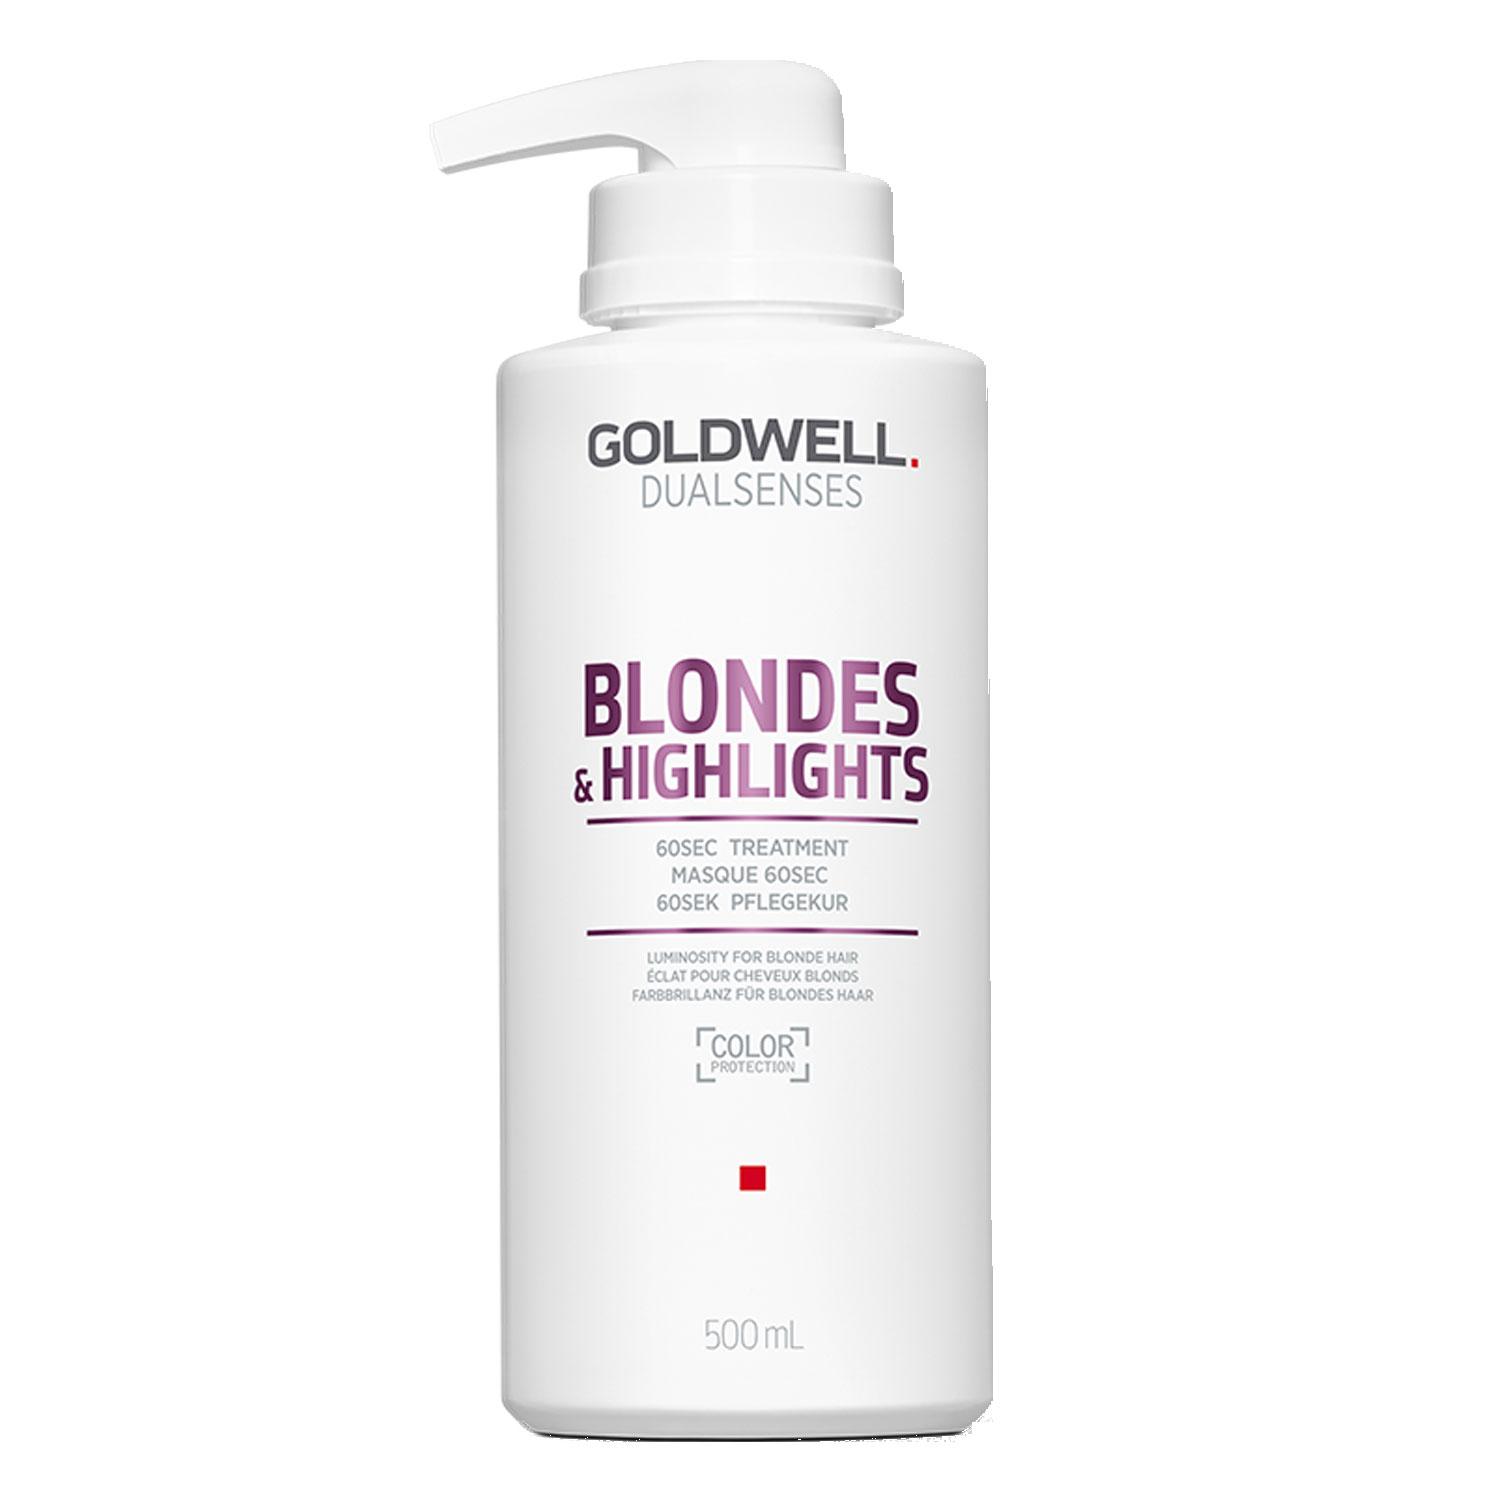 Dualsenses Blondes & Highlights - 60s Treatment